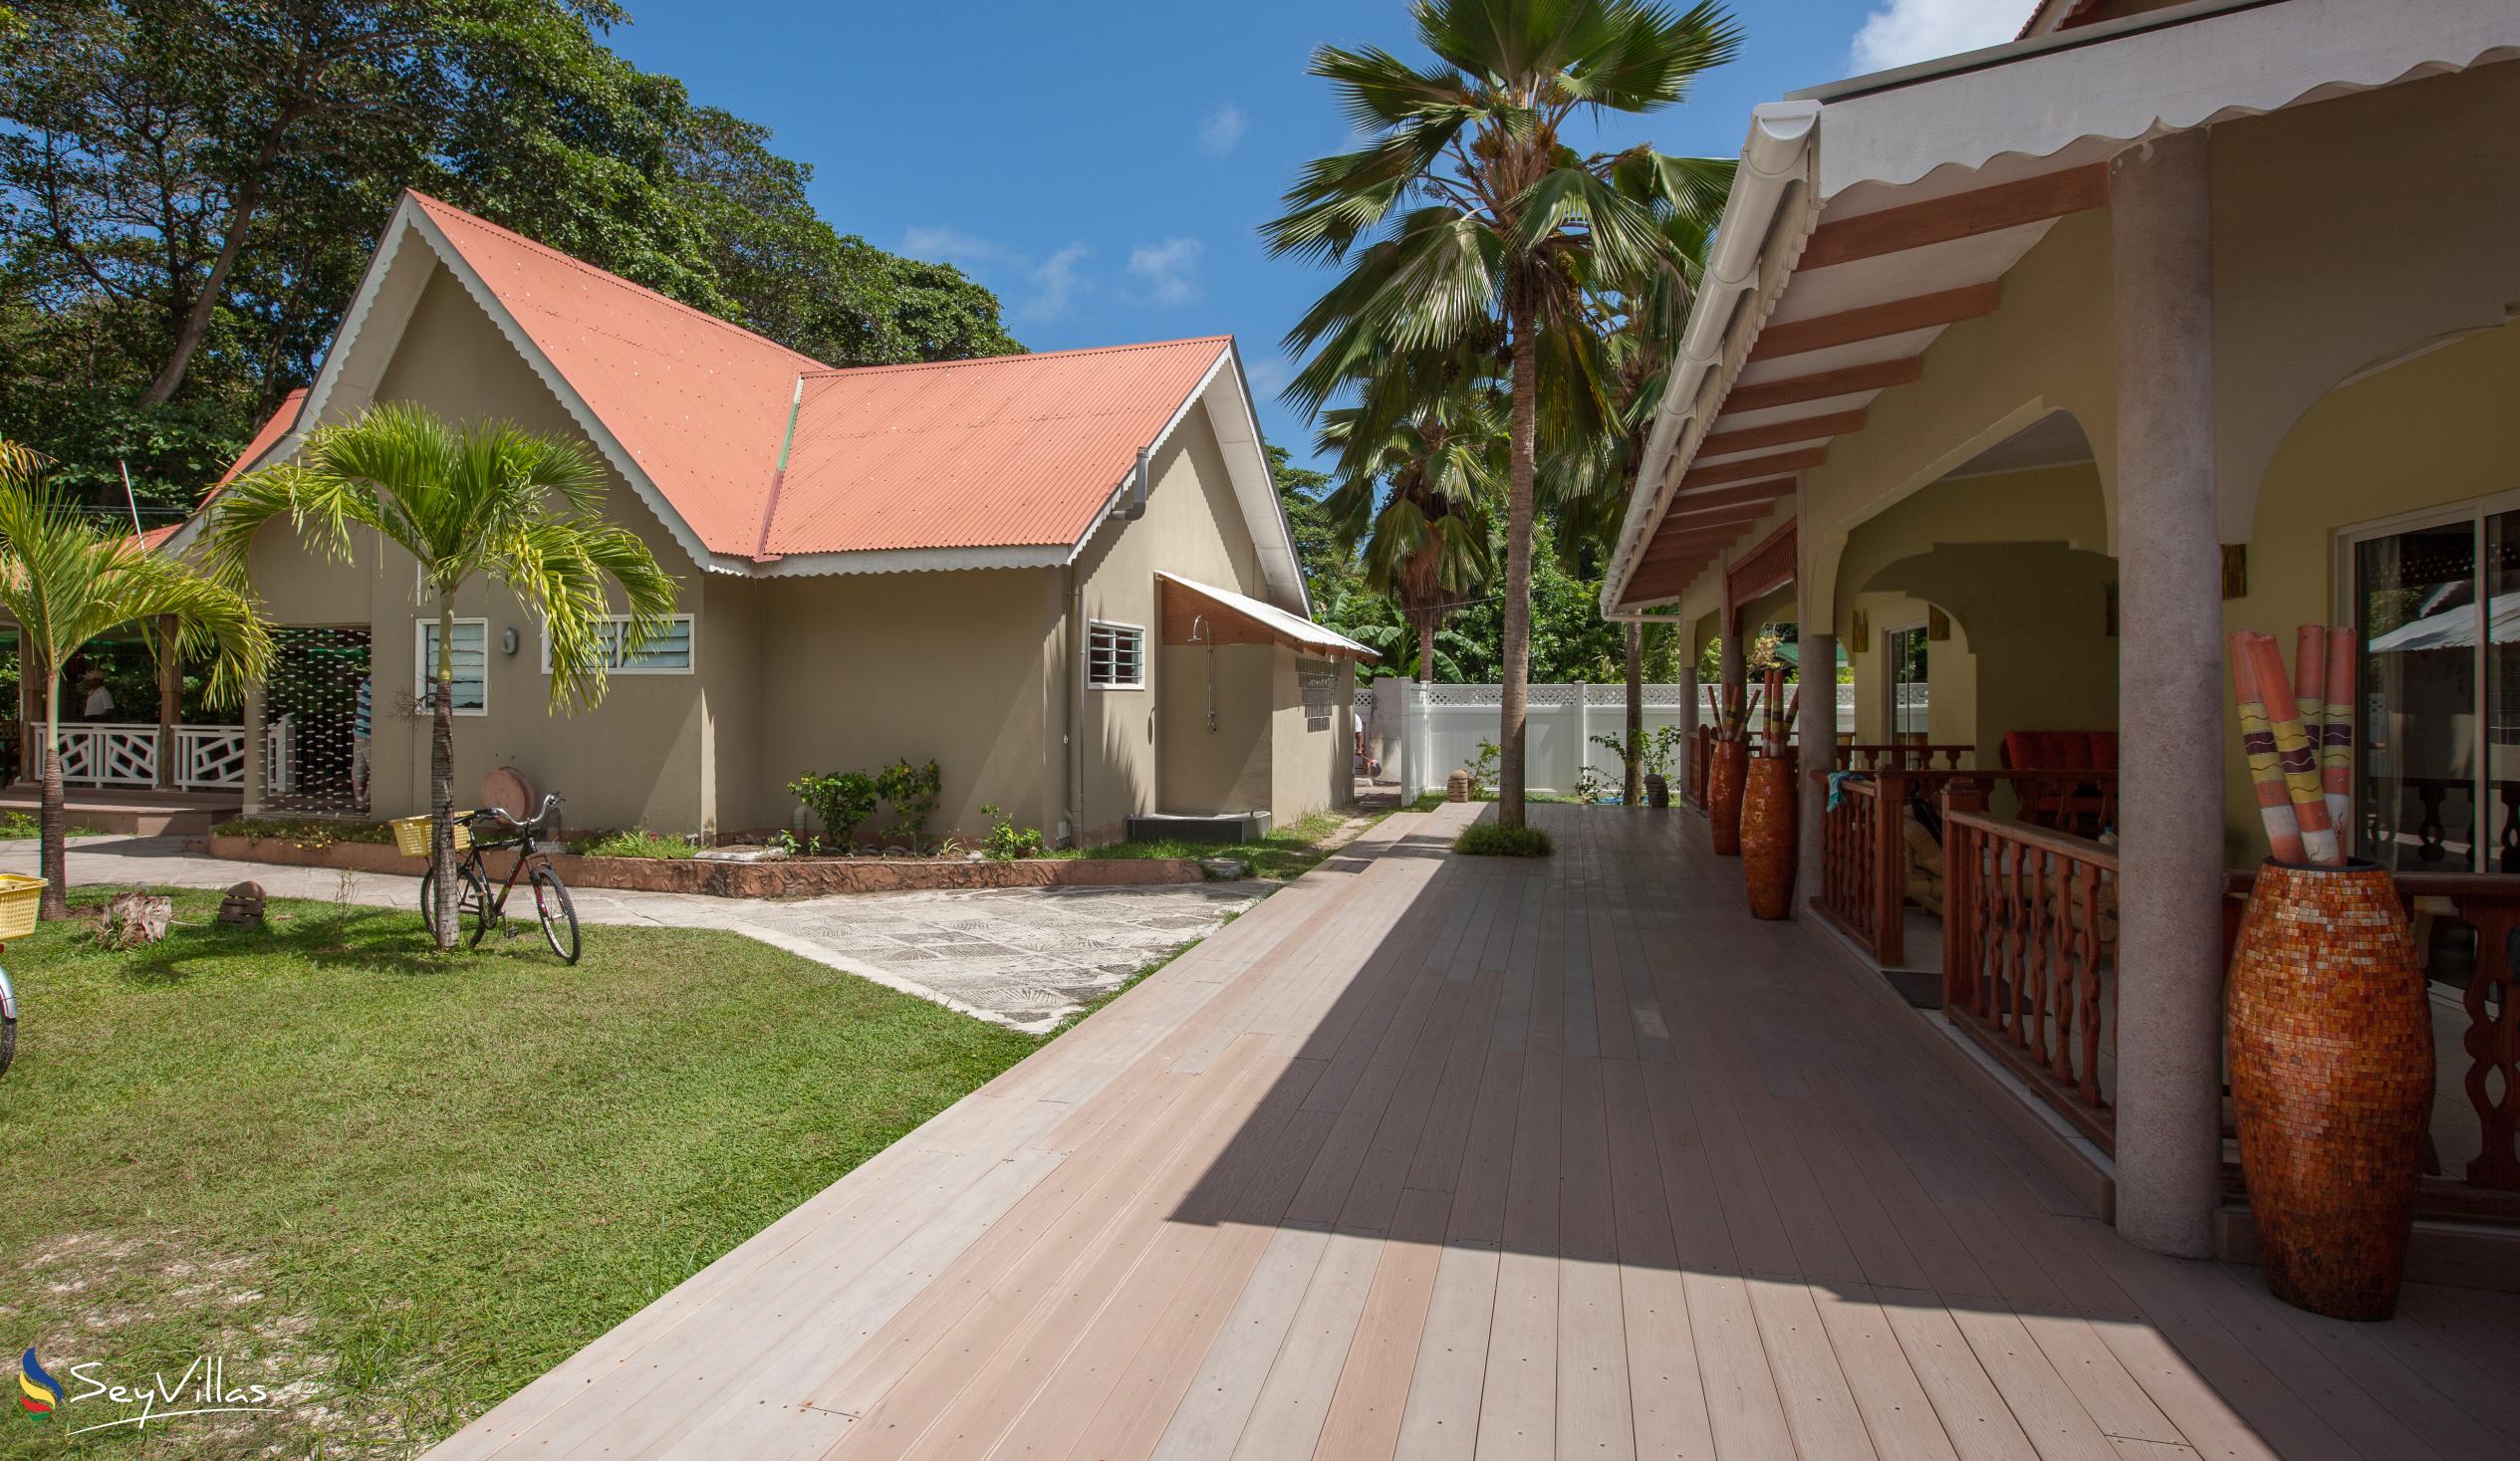 Foto 5: Villa Authentique - Esterno - La Digue (Seychelles)